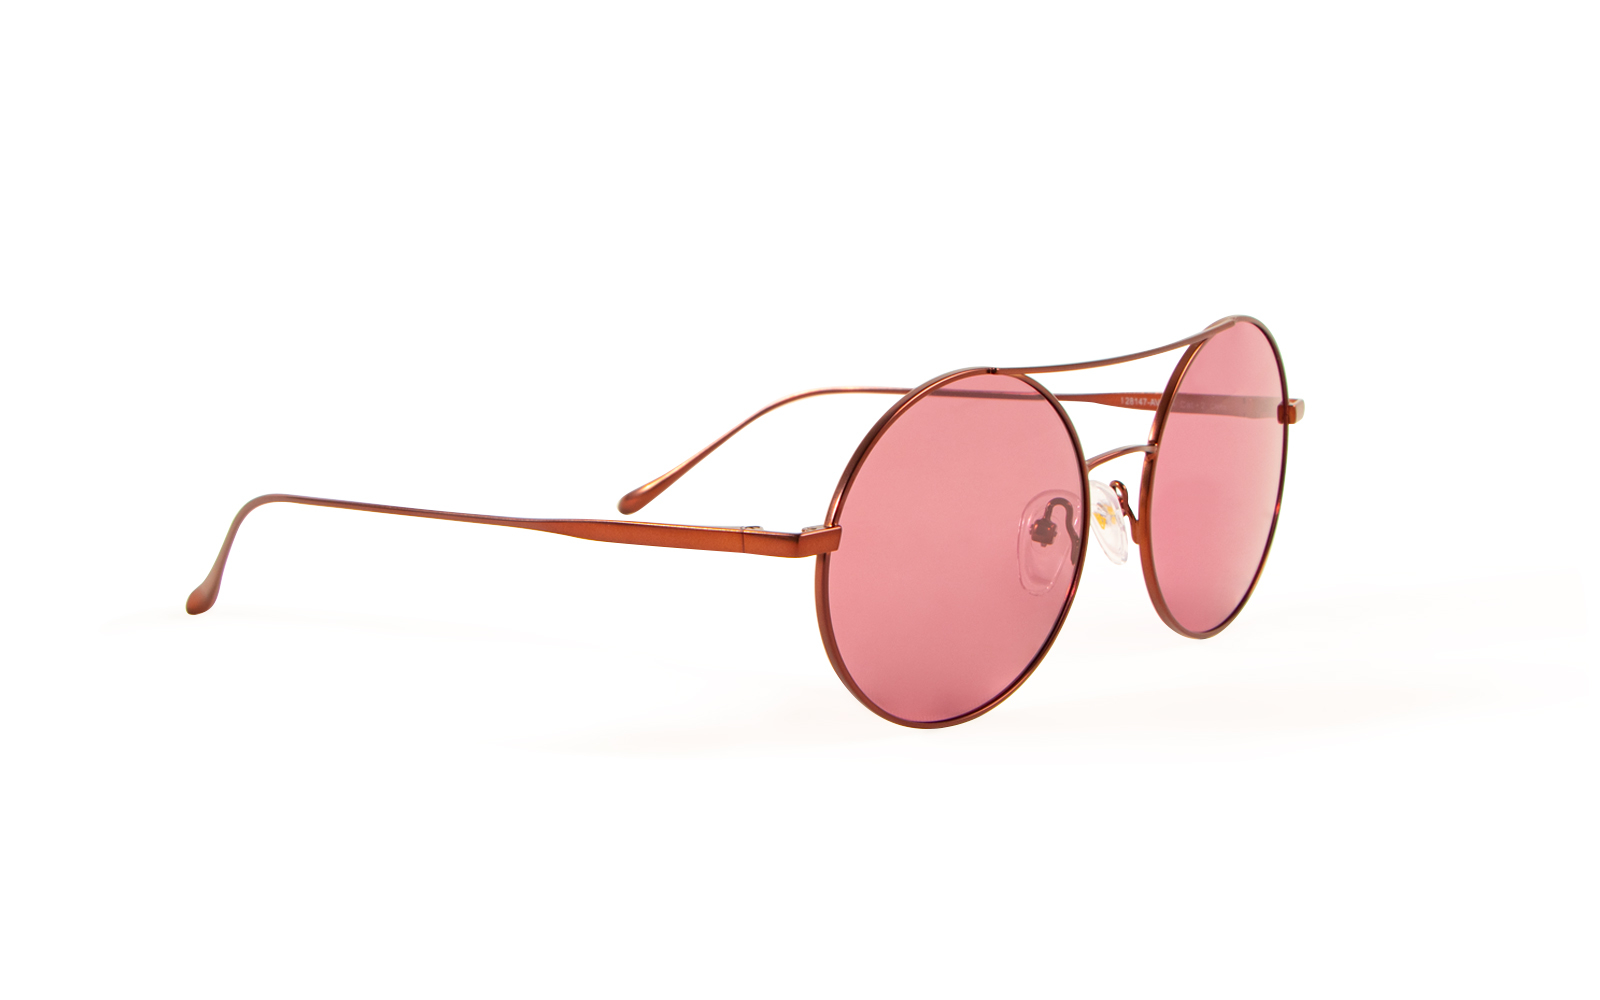 Invicta Men's Aviator Round Sunglasses, Red (28147-AVI-04)